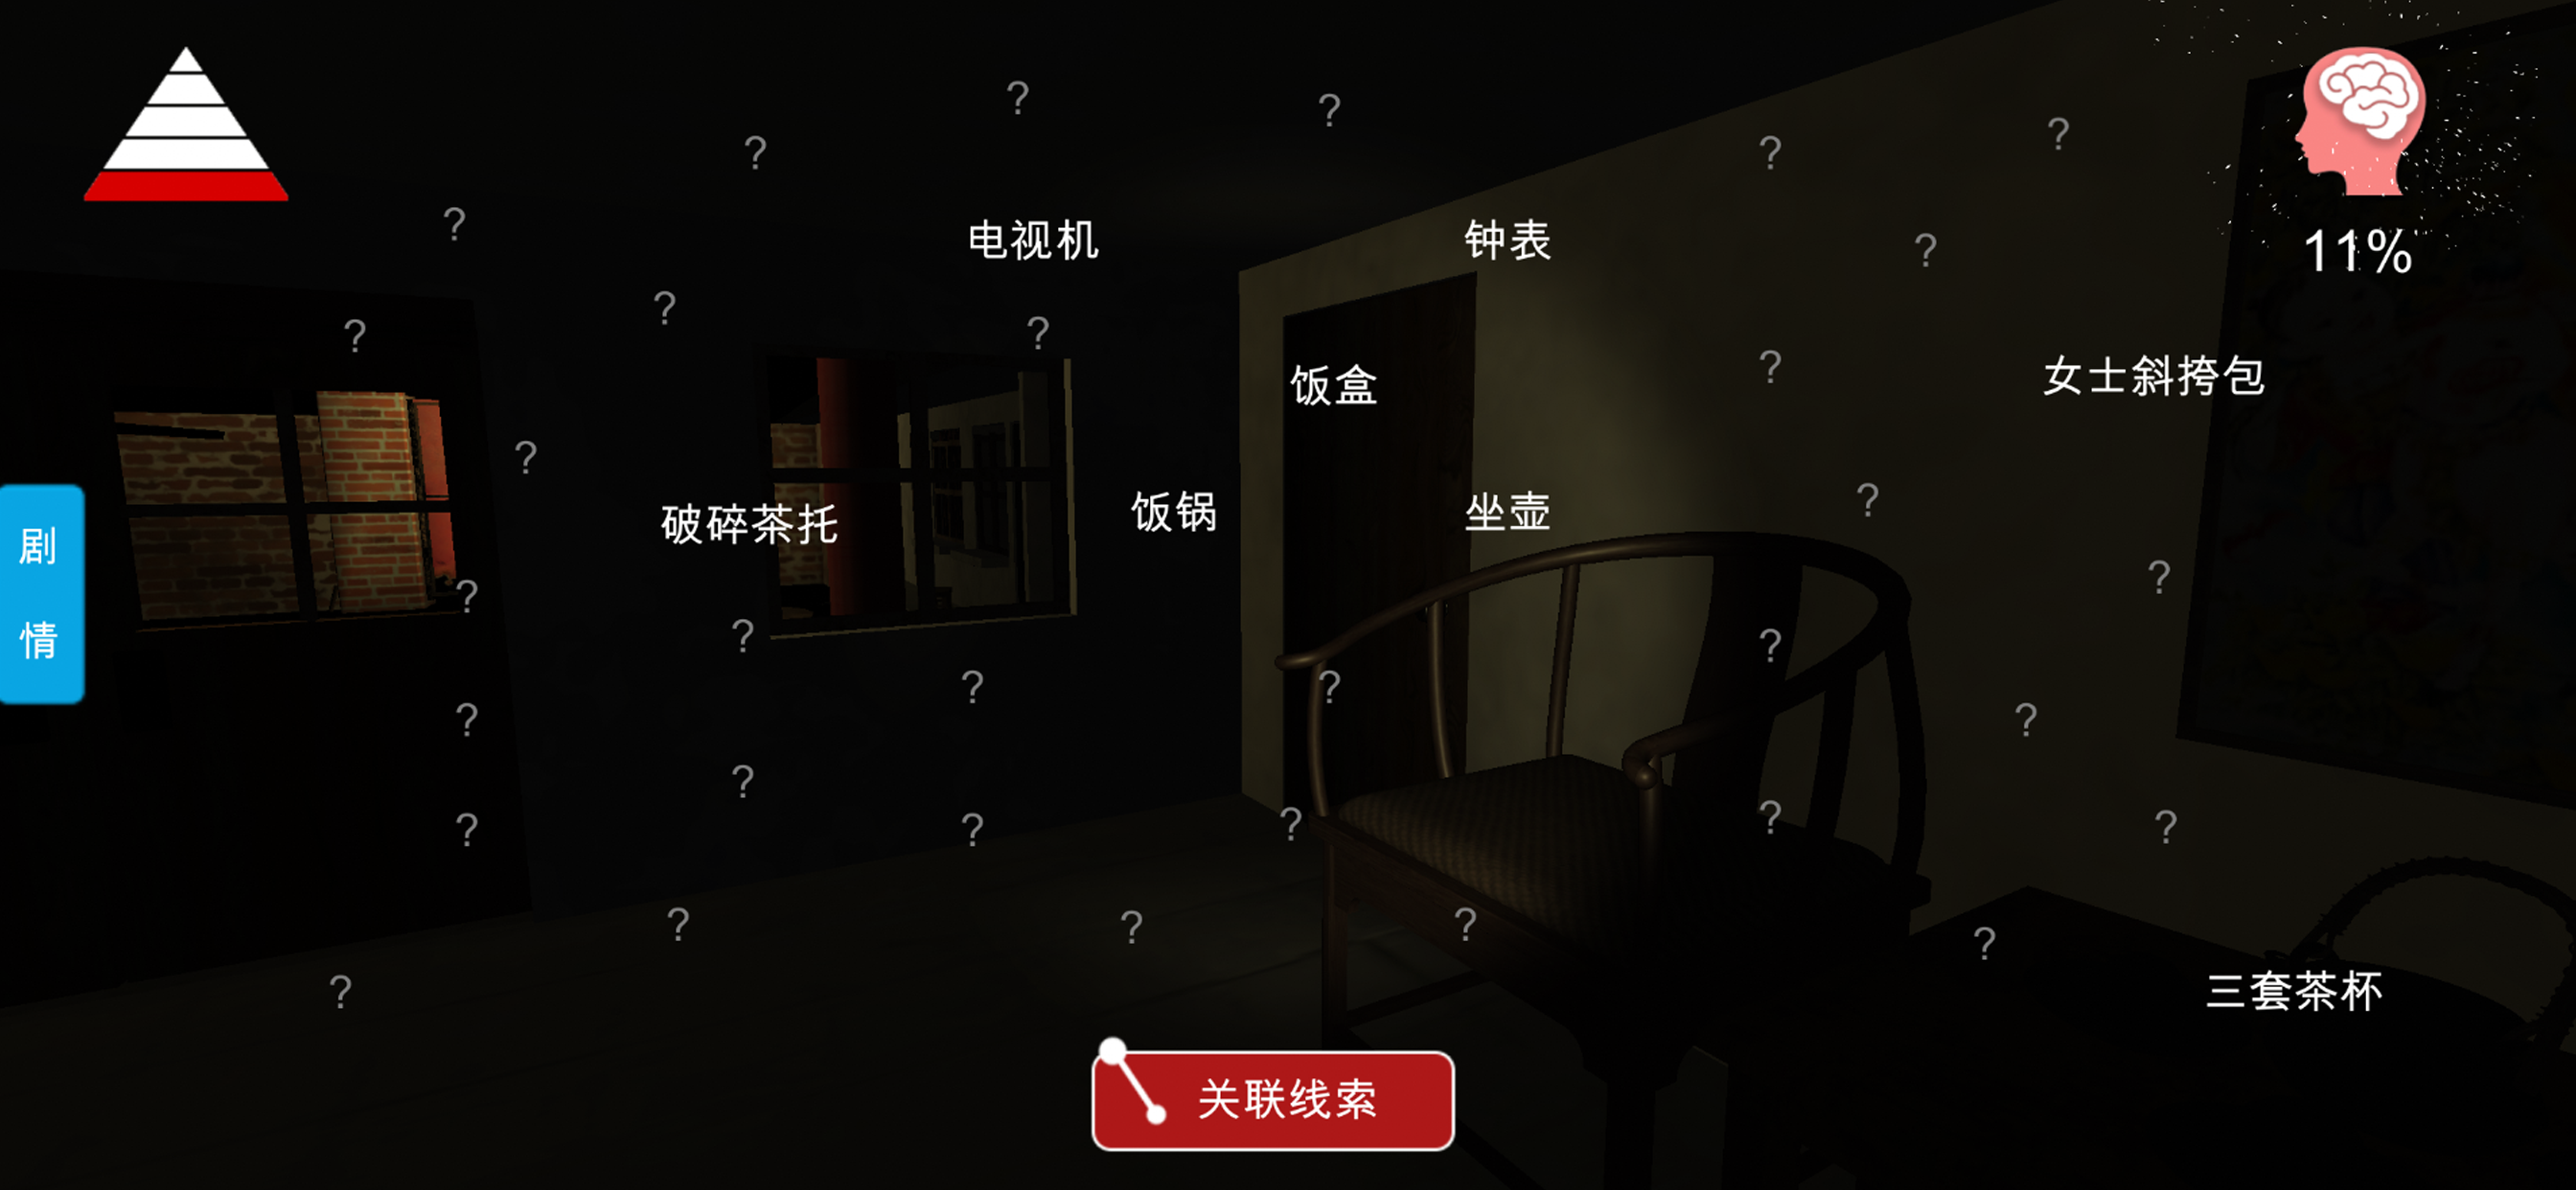 Screenshot 1 of Sân của Li 1.0.3